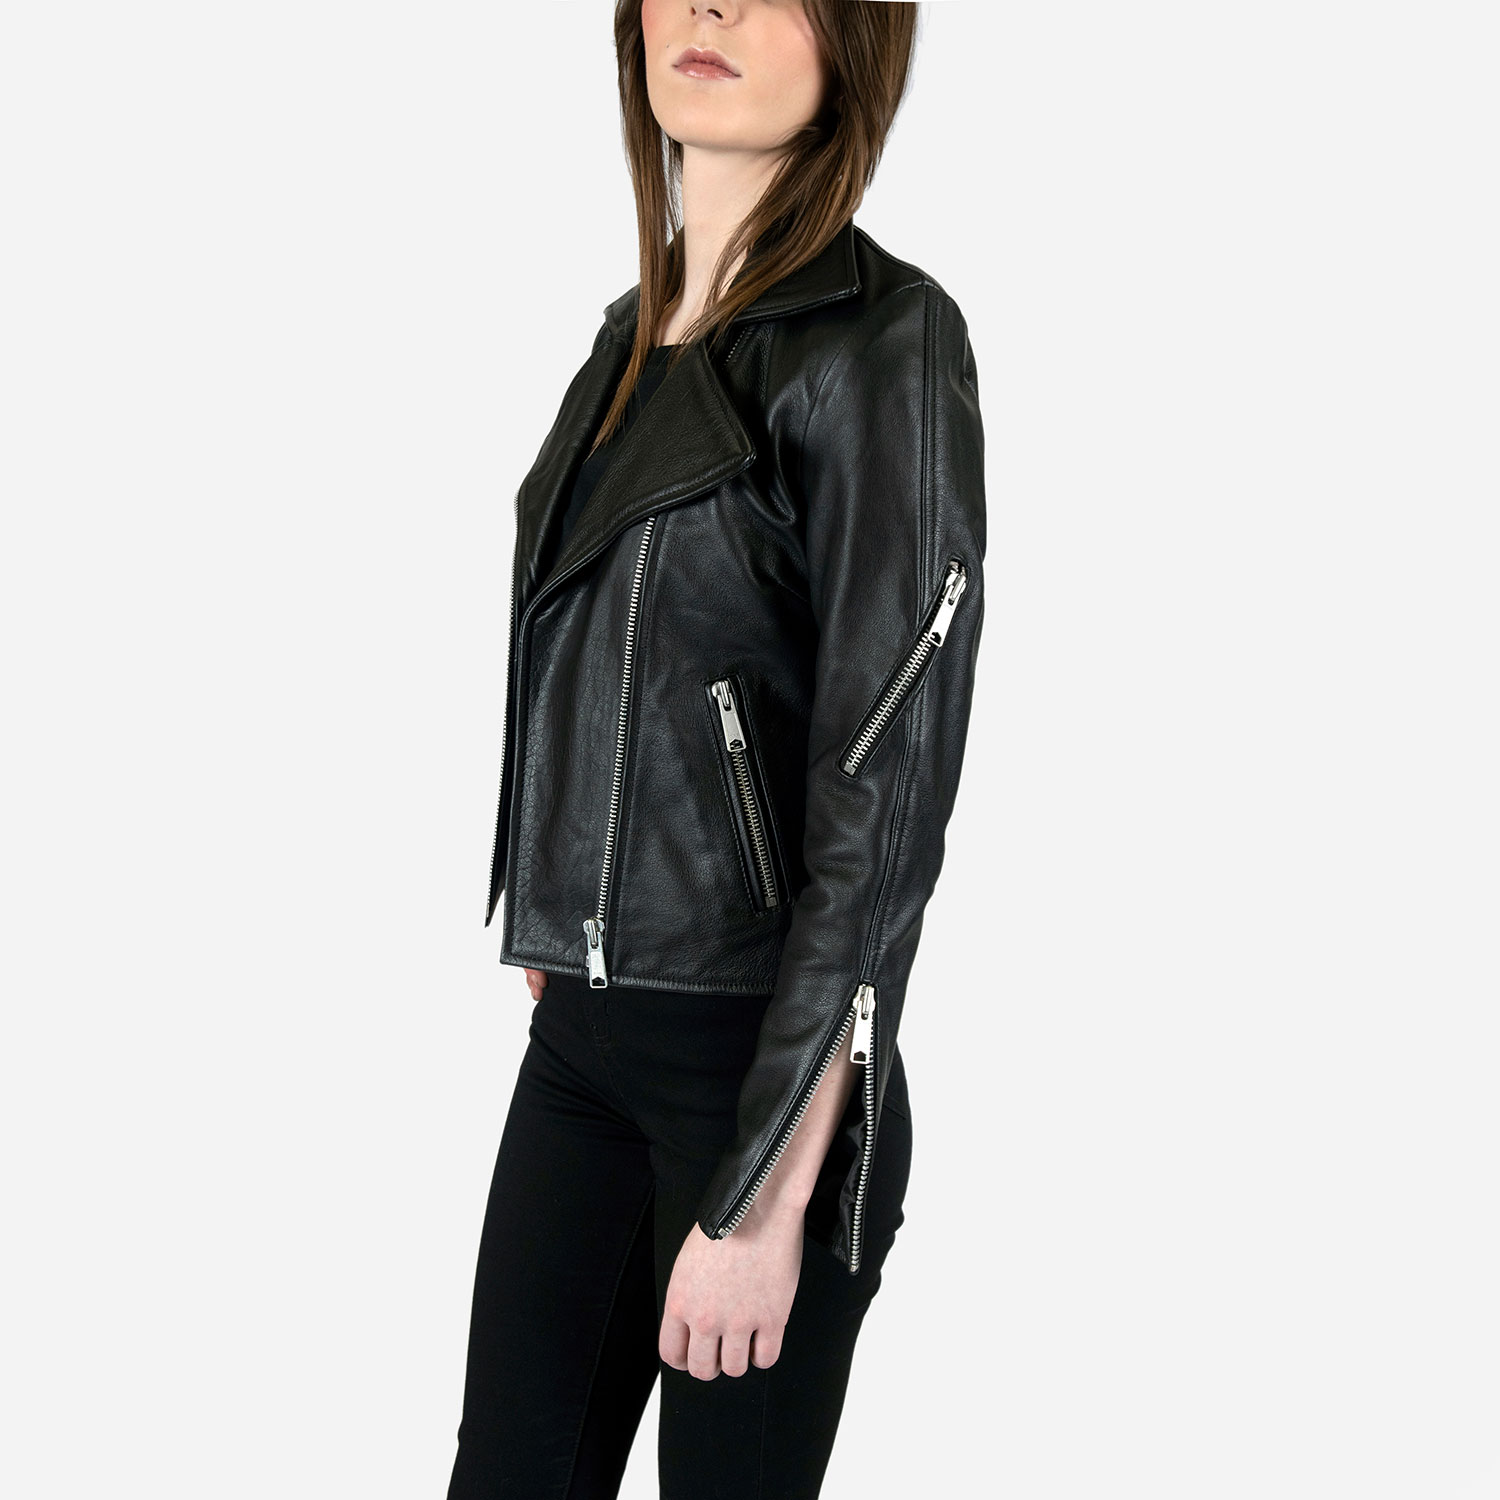 Flash - Leather XS, XL, M, Hell Apparel Jacket Straight (Size S, To 2XL, | L, 3XL, 4XL)